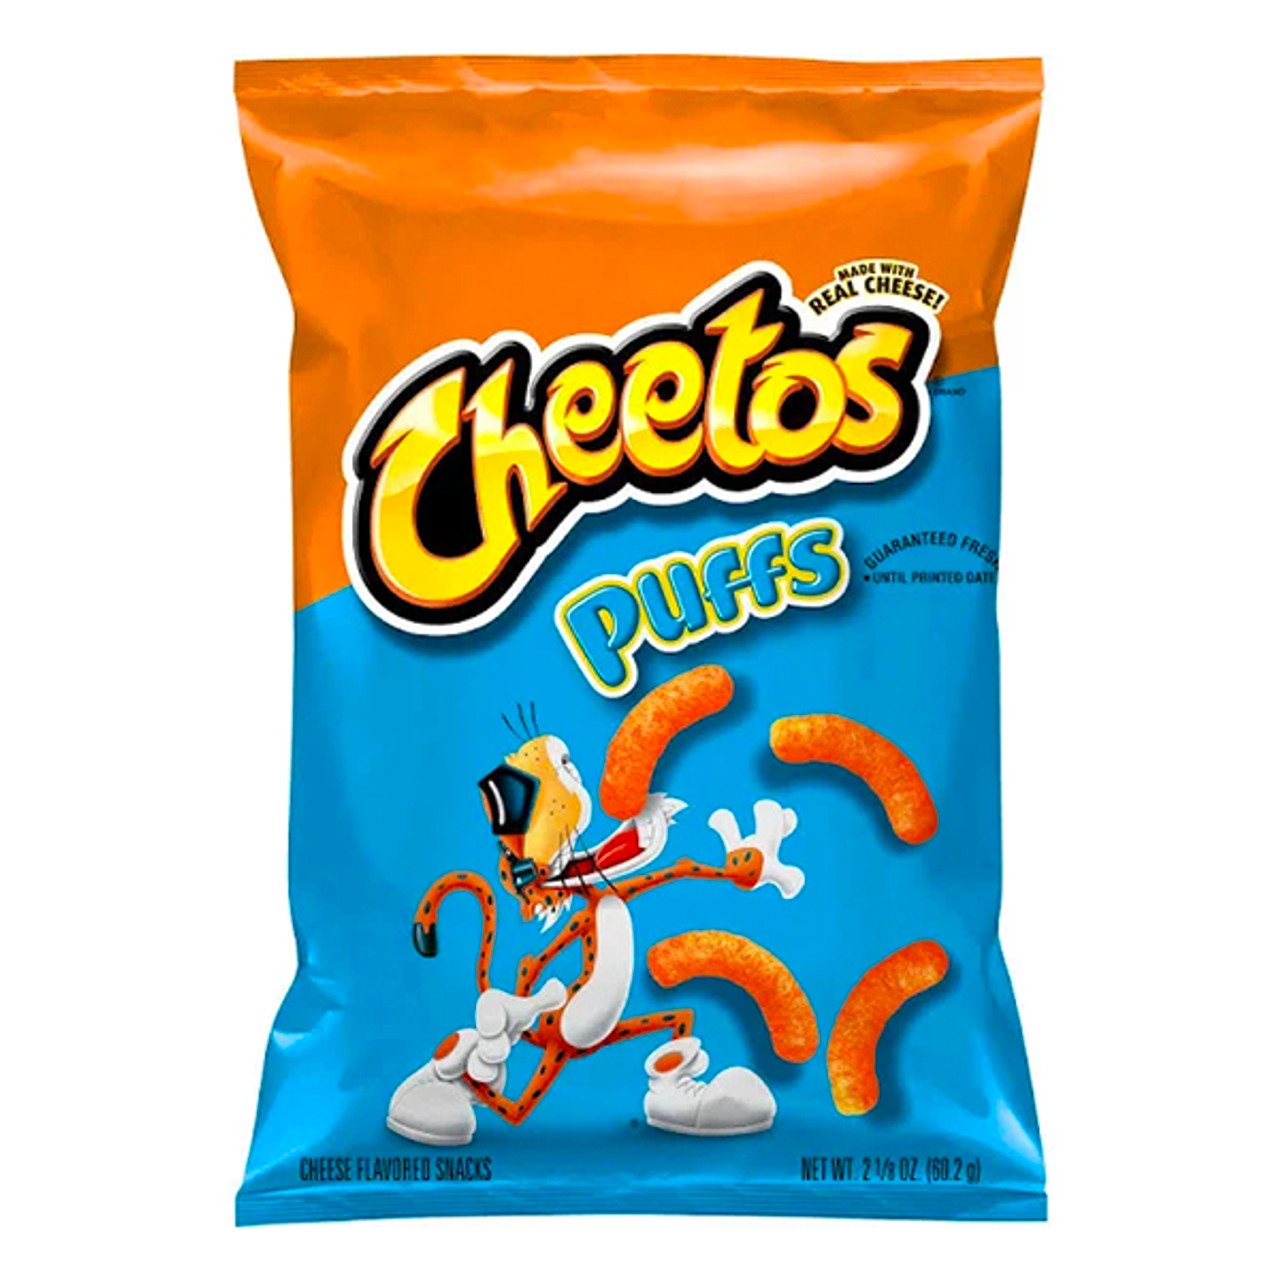 Cheetos Crunchy Cheese Flavored Snacks Flamin' Hot - 3.25 oz bag | GIANT